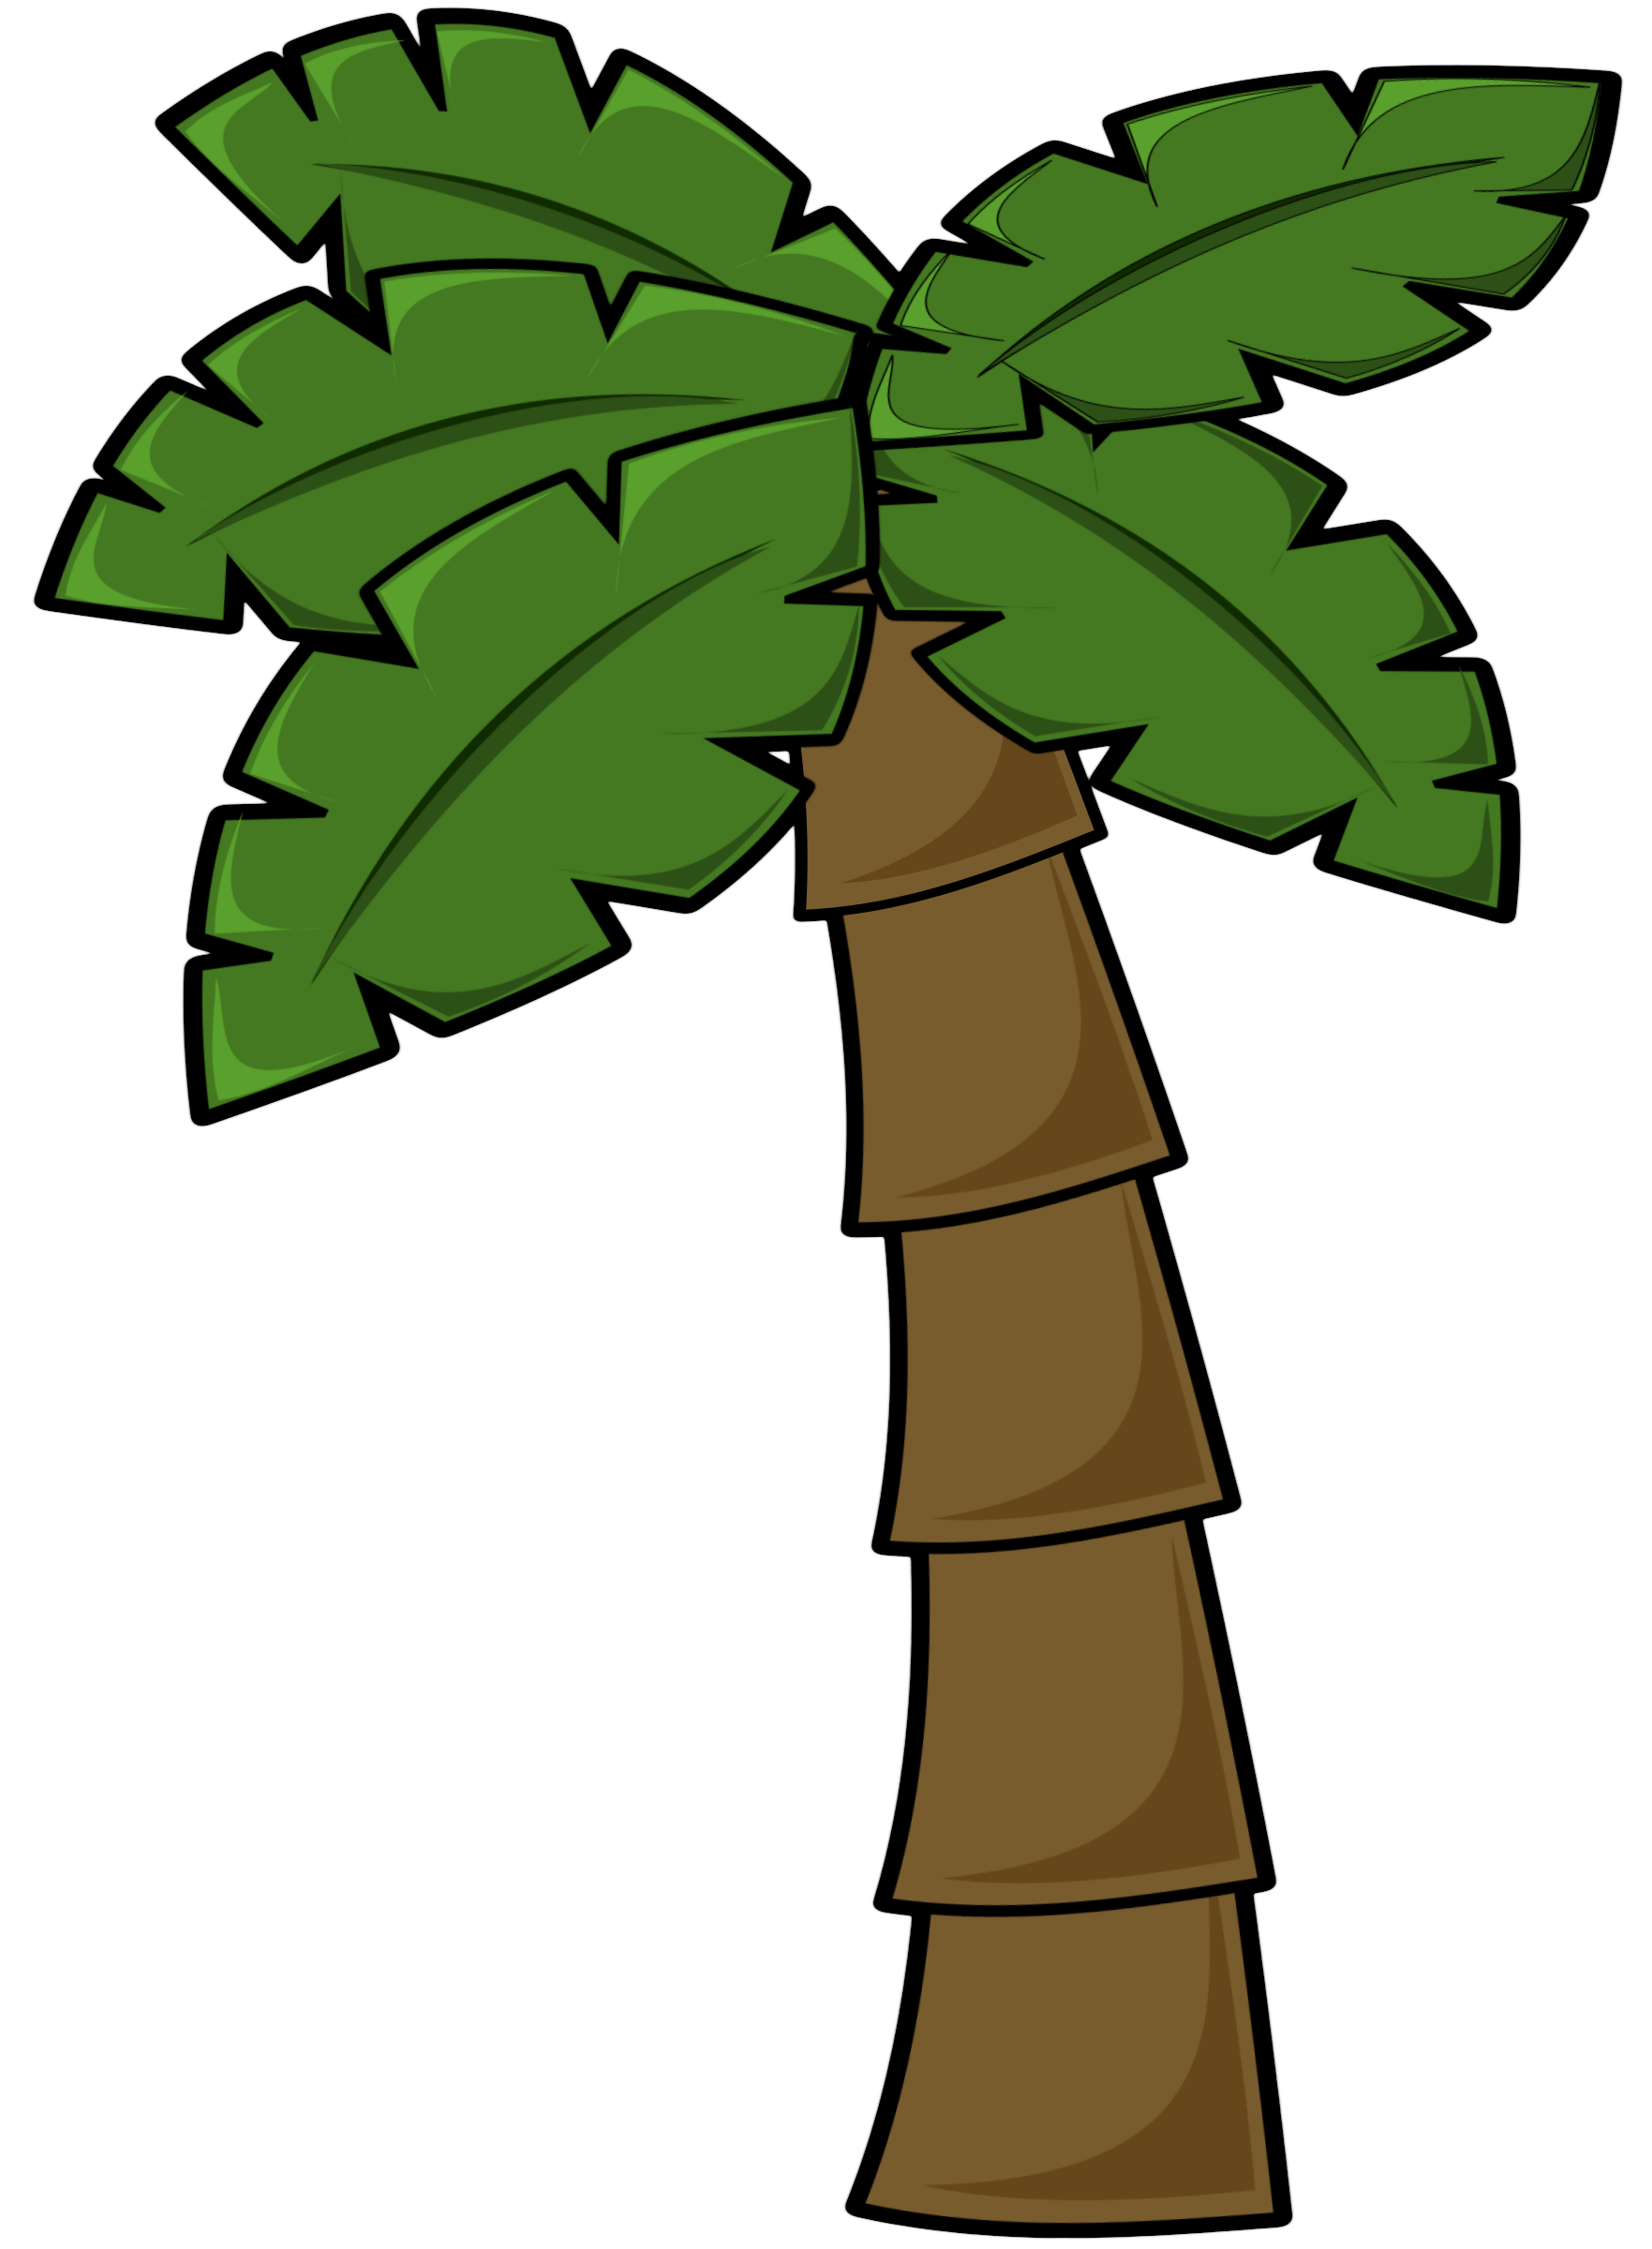 Palm tree images clip art